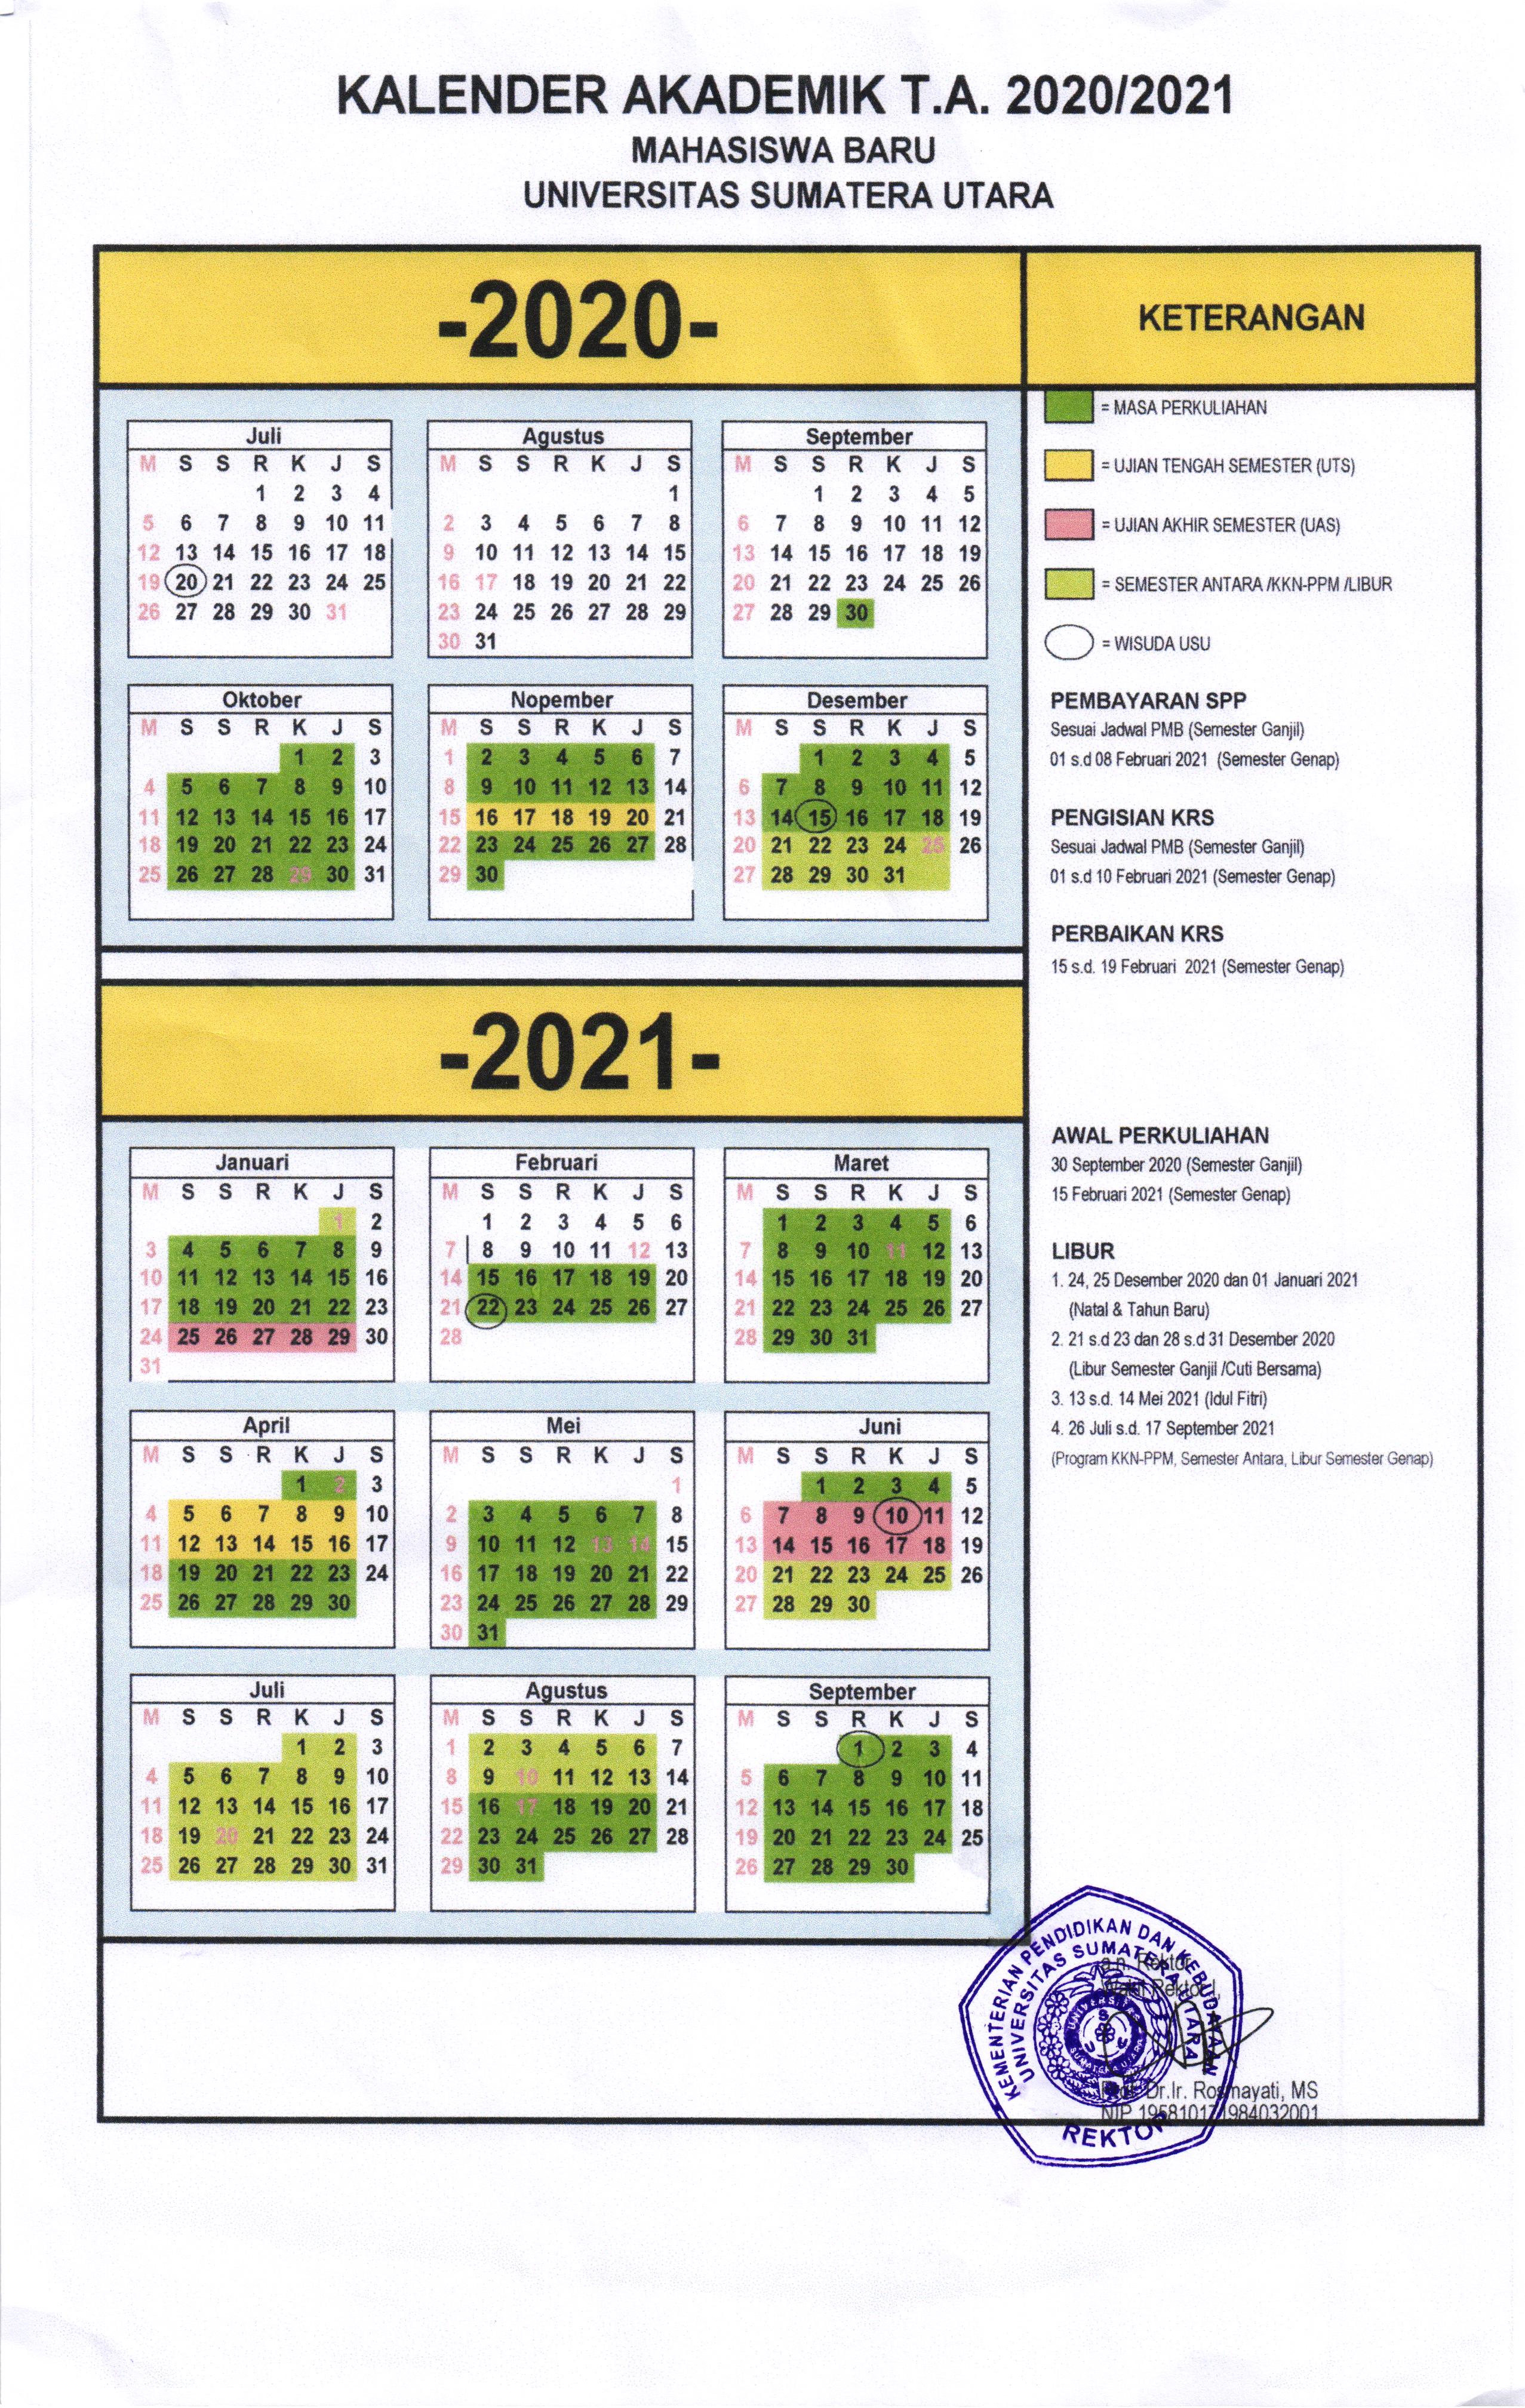 Kalender Akademik mahasiswa Baru